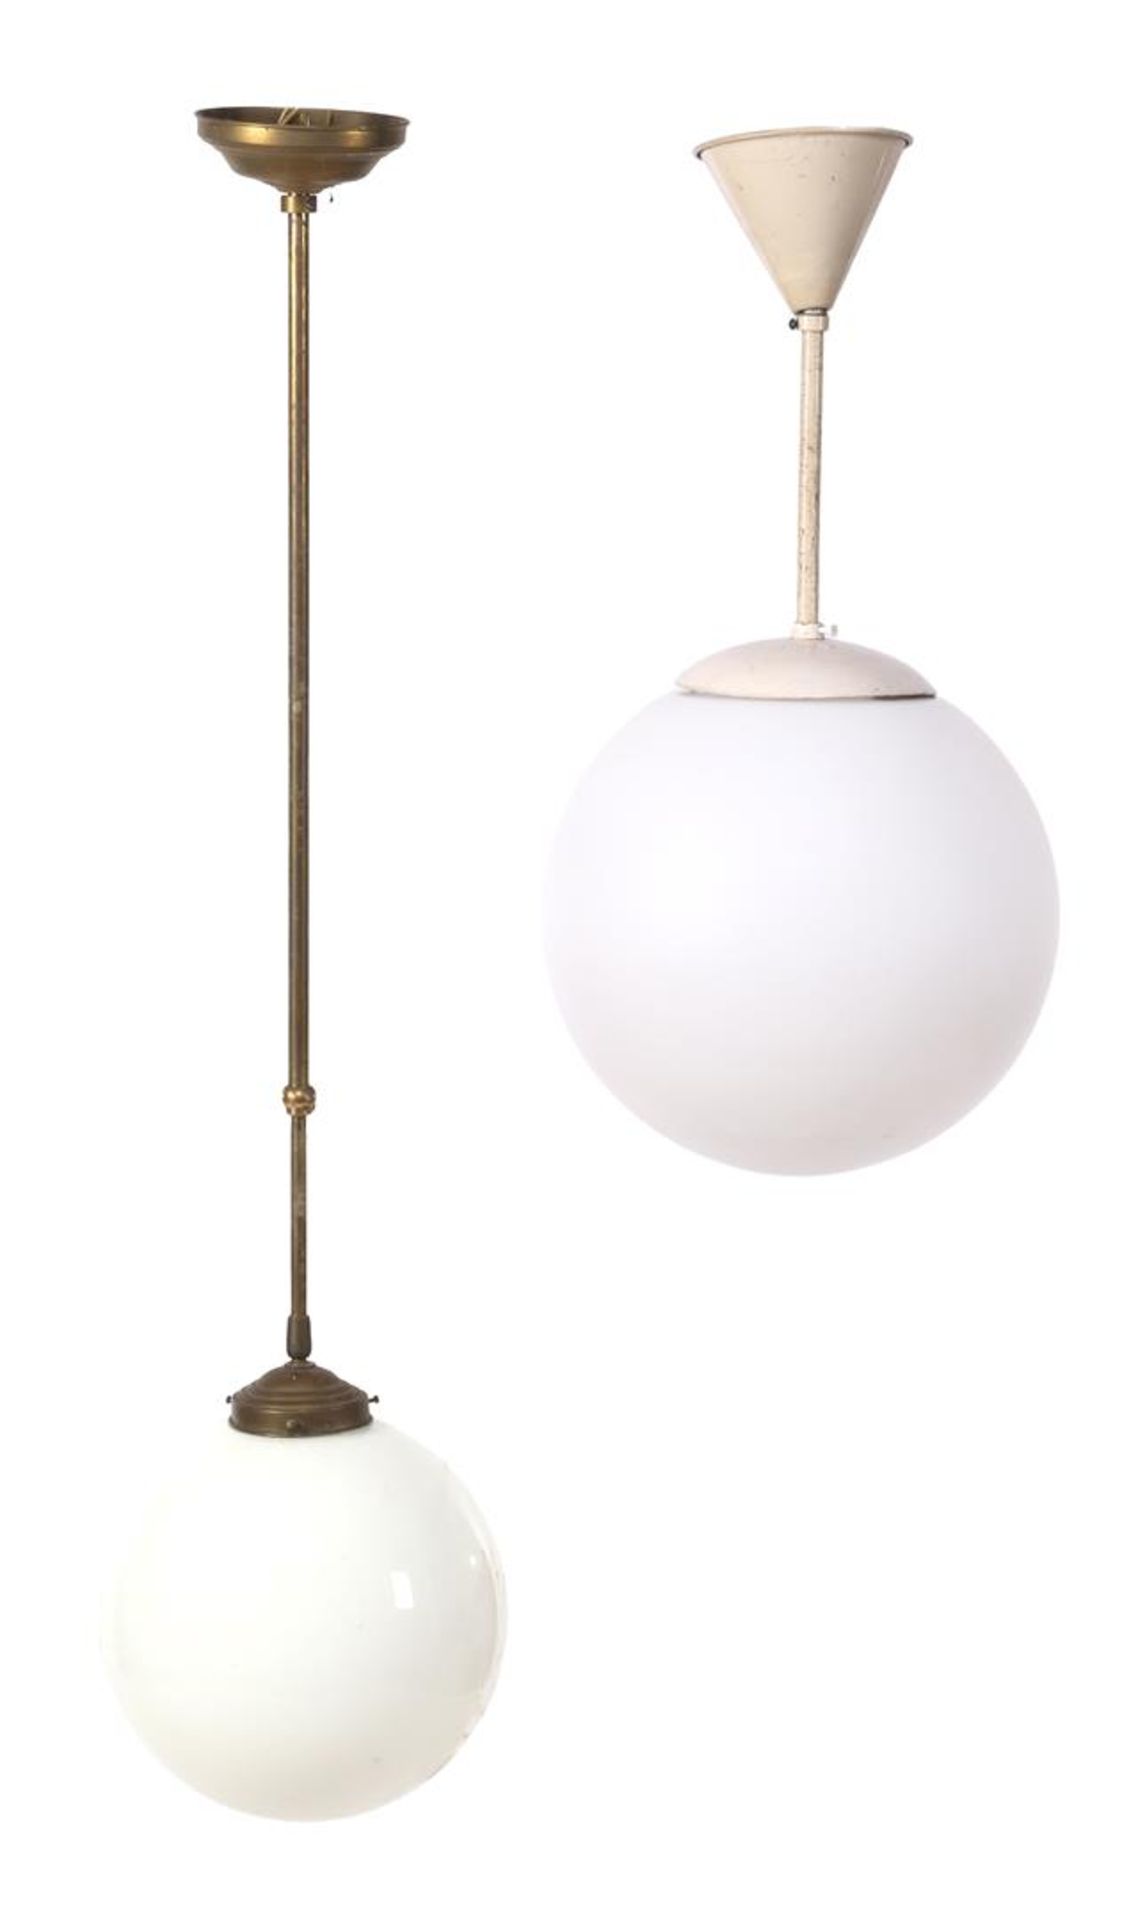 2 hanging lamps